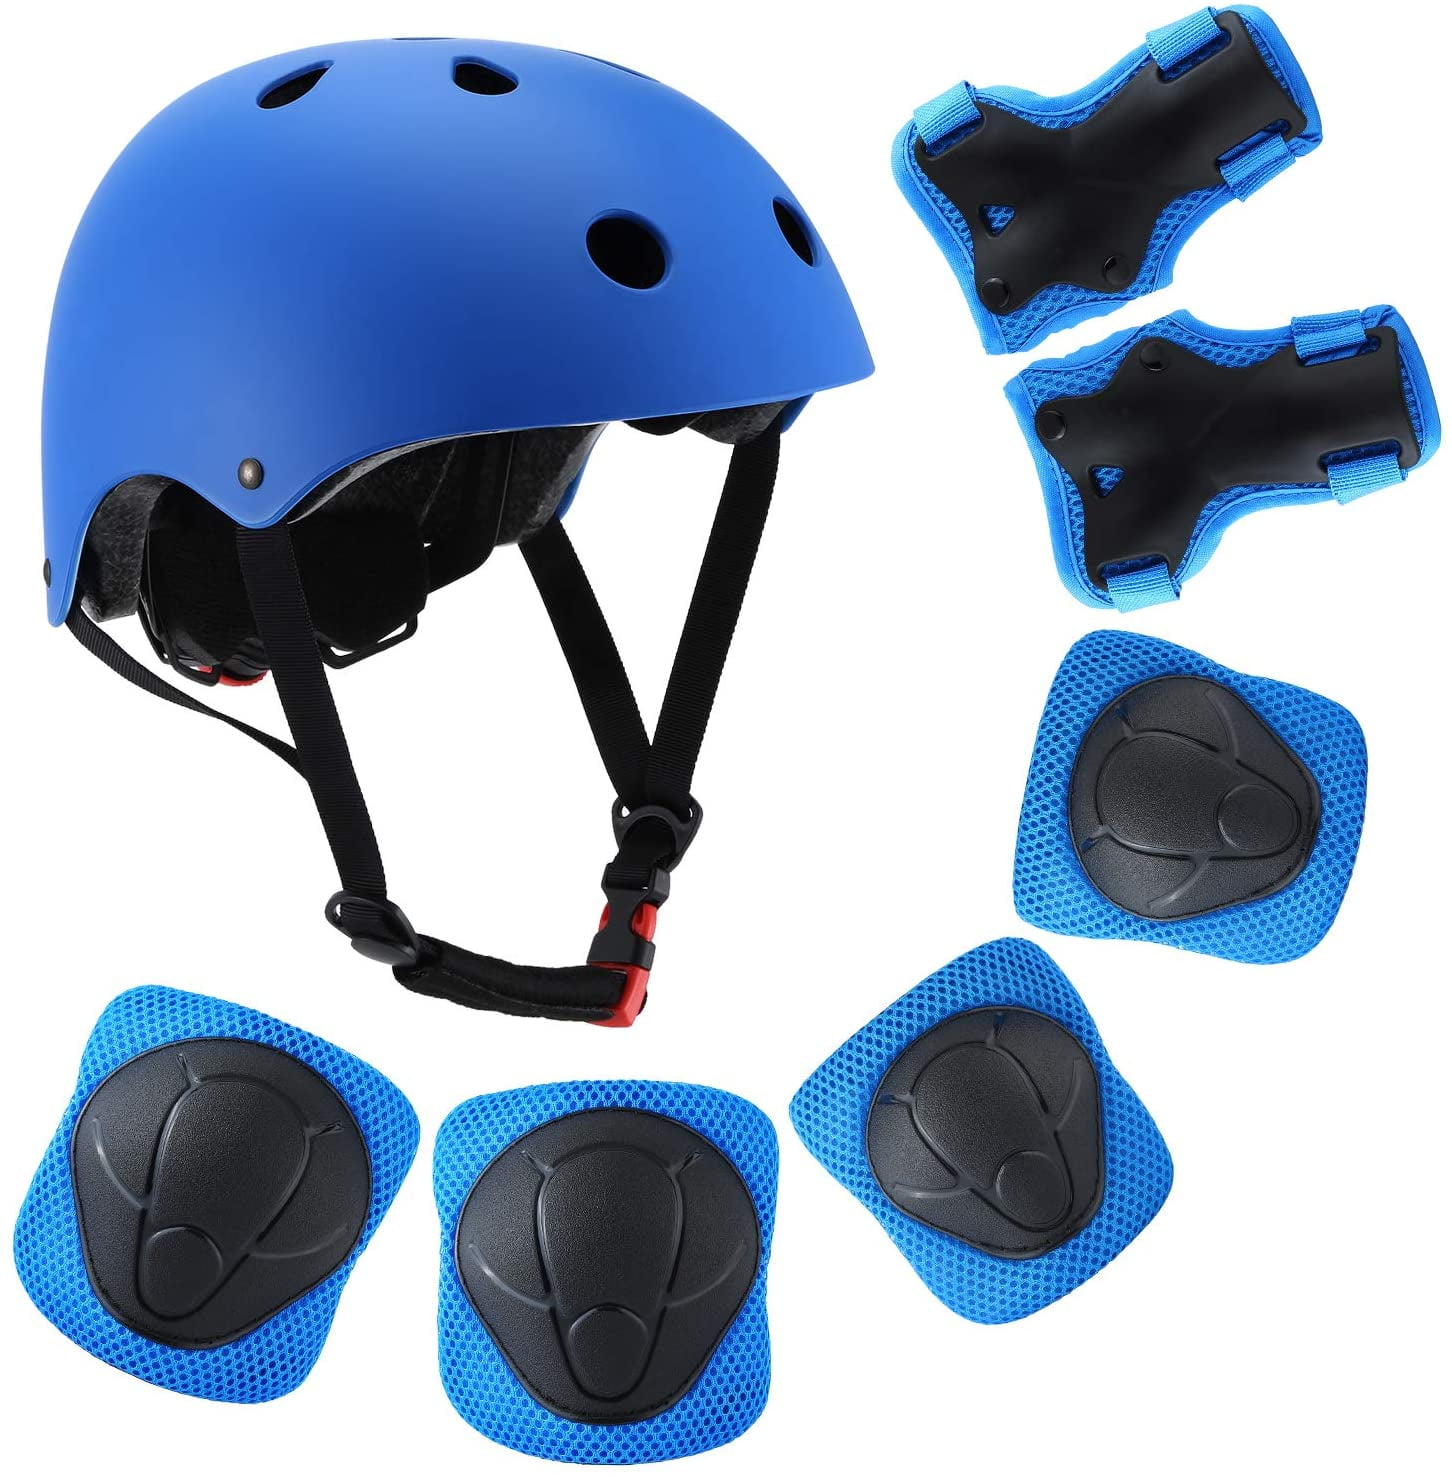 Kids Knee Pads & Elbow Pads & Helmet with Wrist Guards Protective Gear Bike Ski 